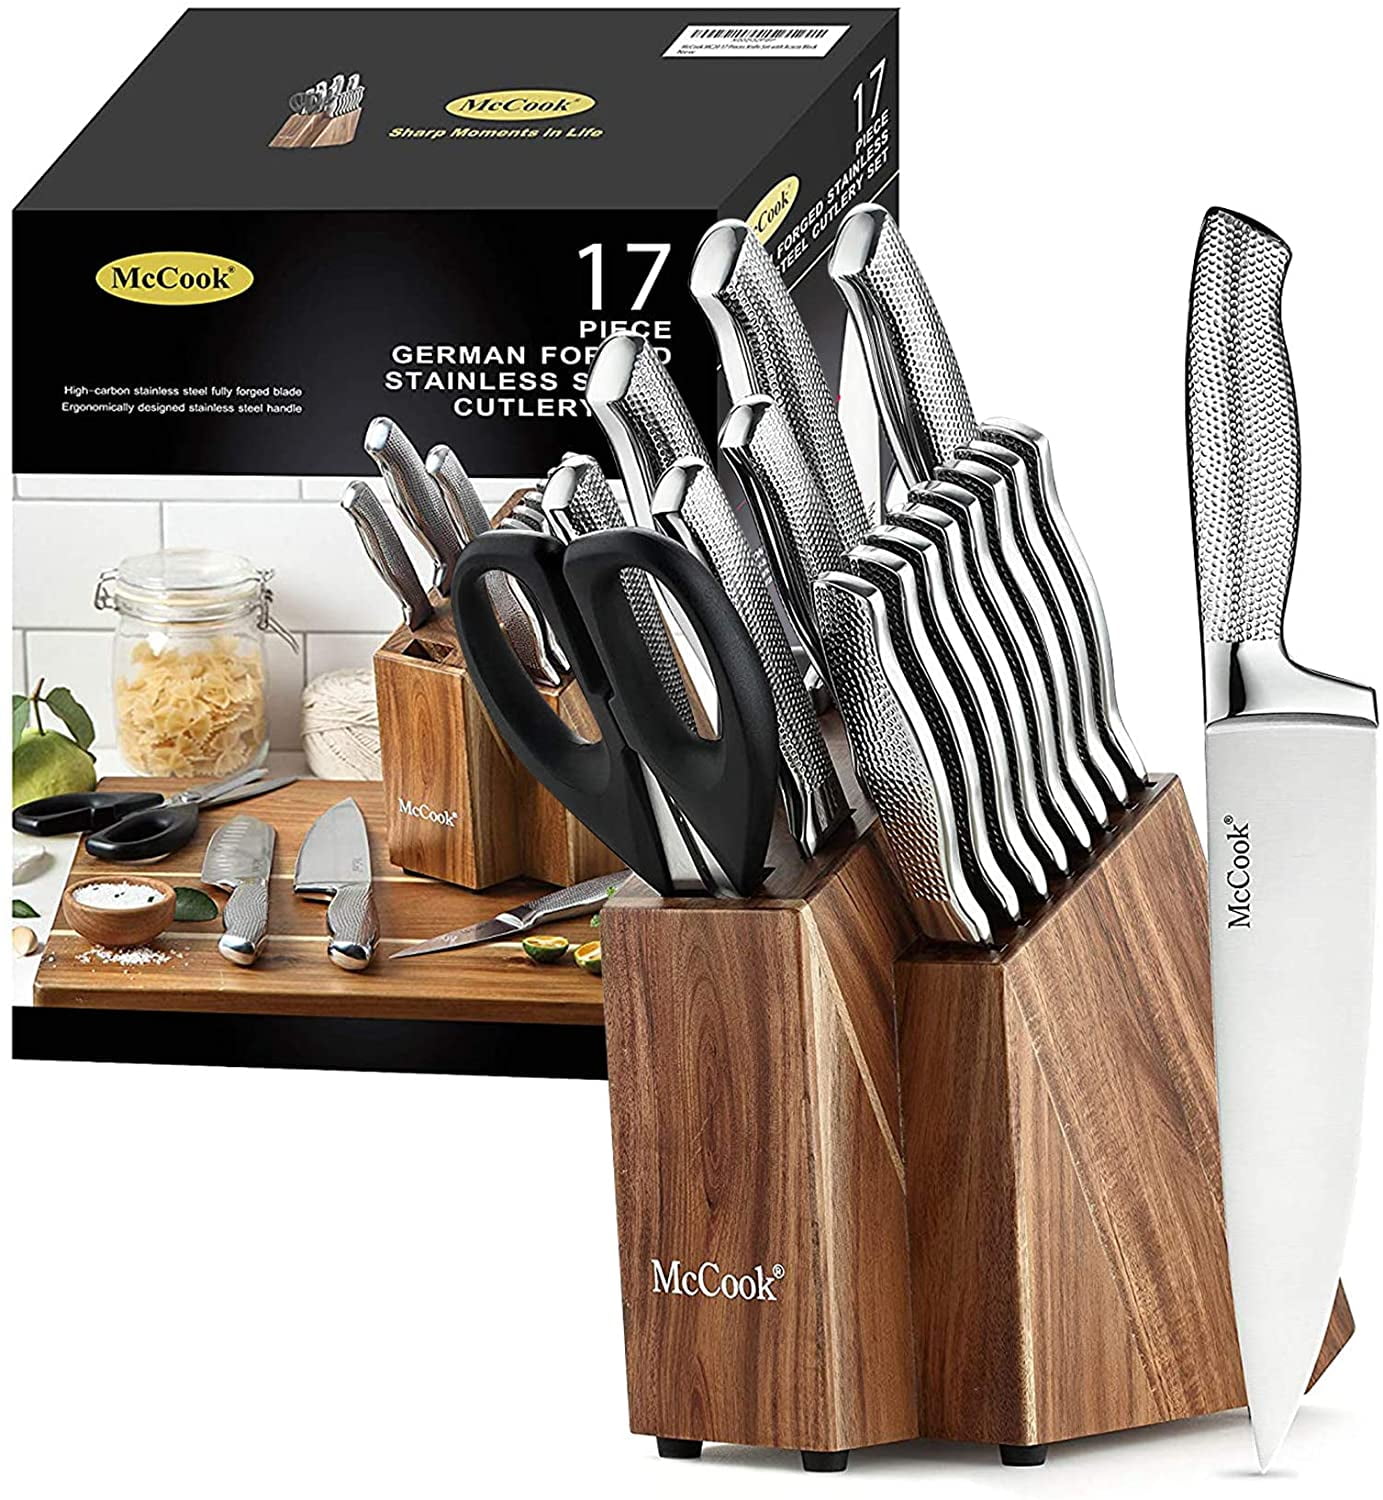 Chicago Cutlery ProHold Nonstick Knife Block Set, 14 Piece - Harris Teeter